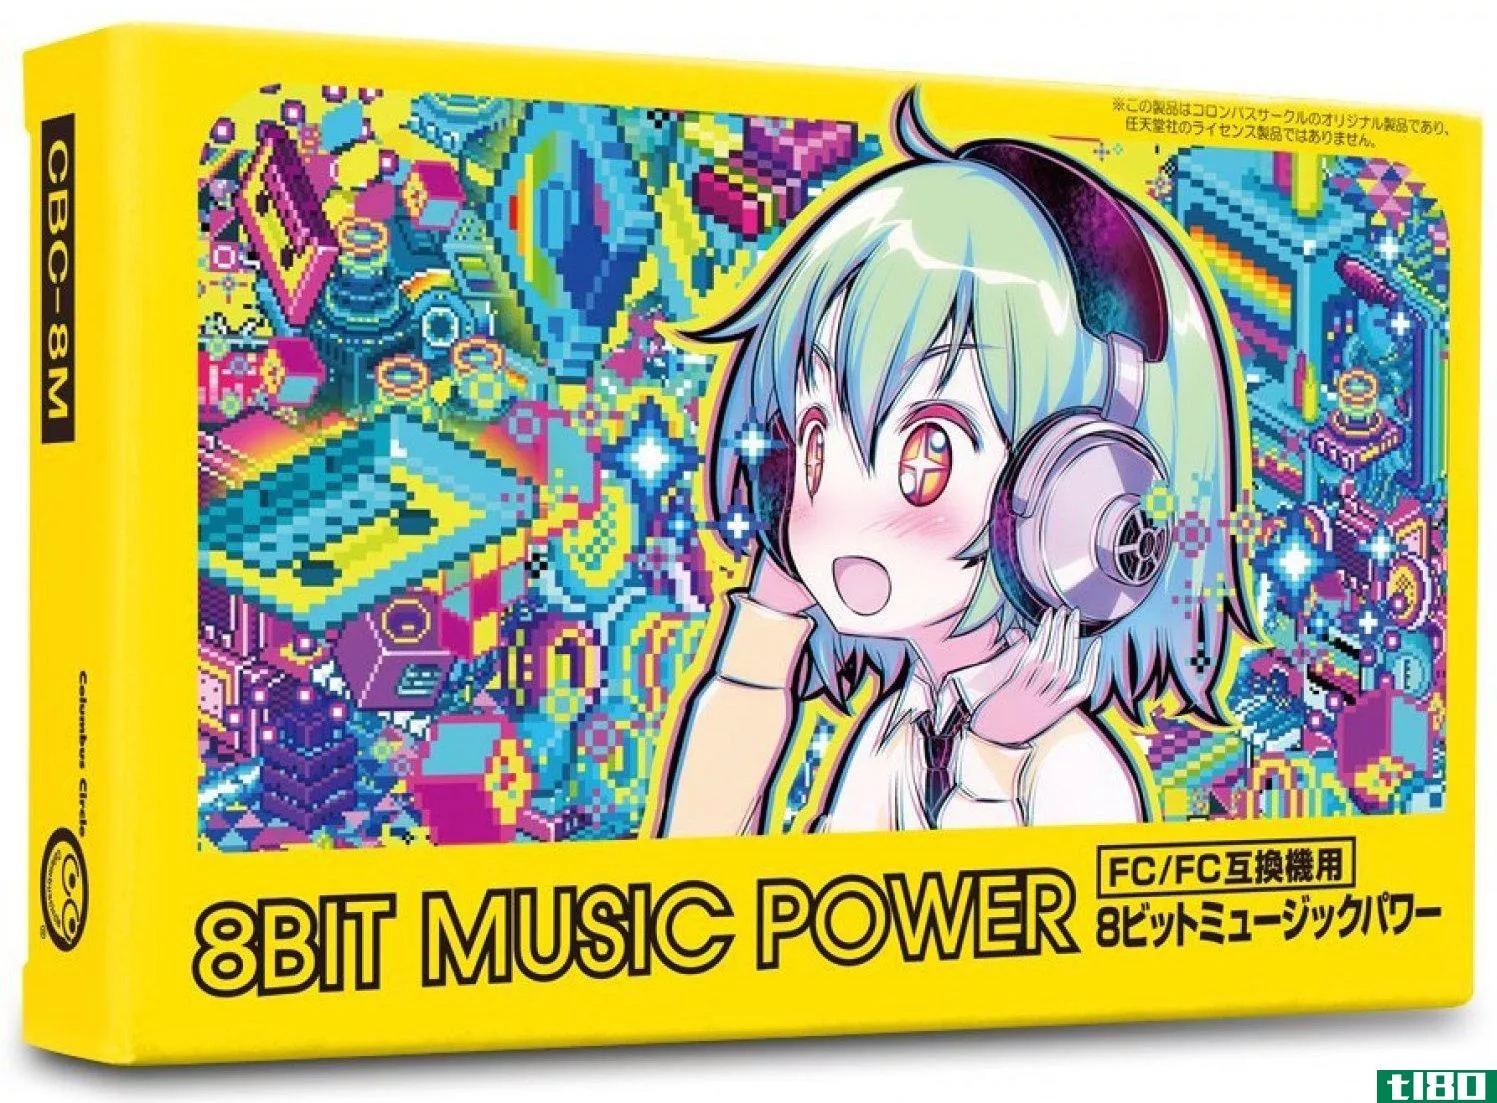 8bit Music Power